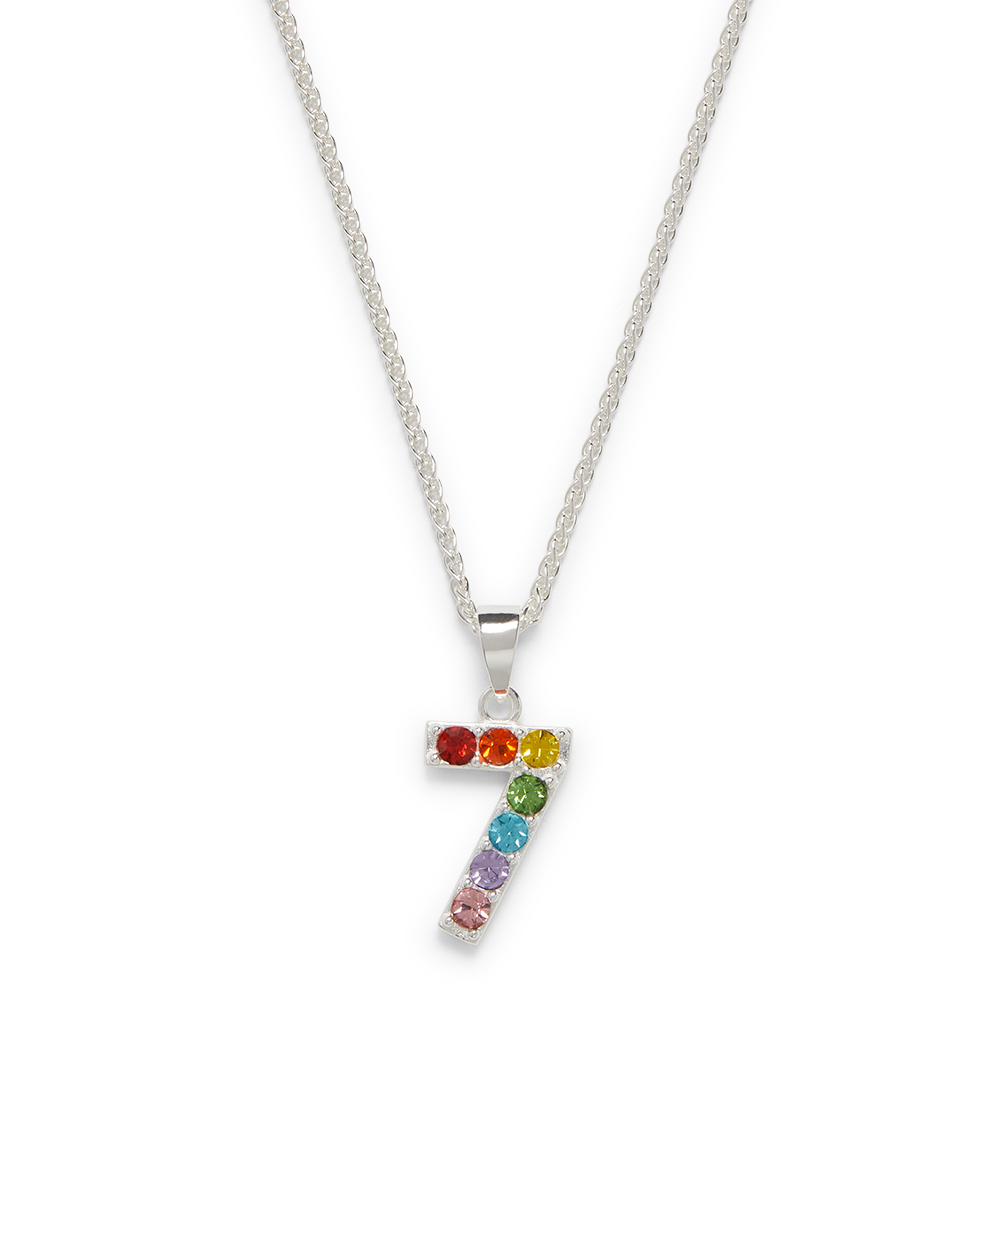 rainbow seven necklace